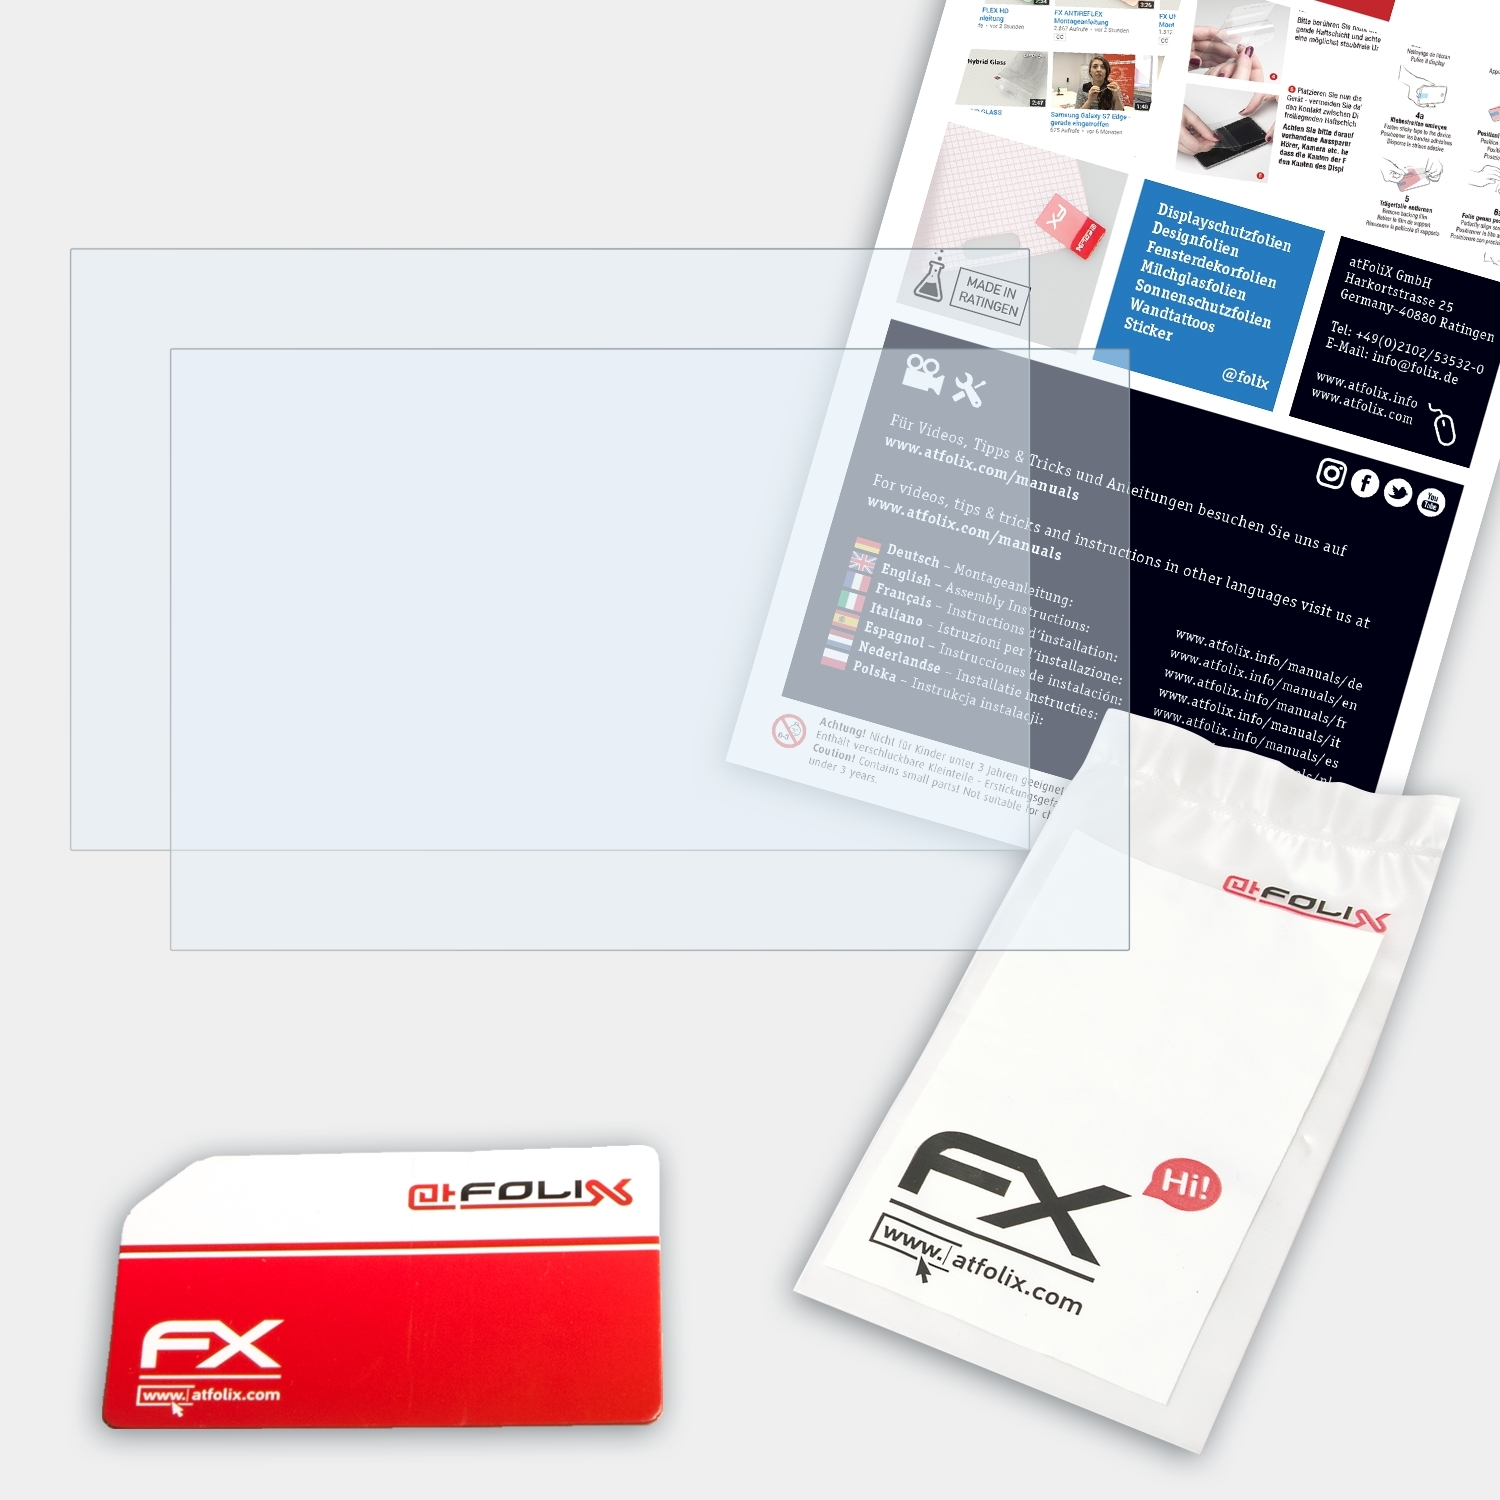 FX-Clear Displayschutz(für 2x T730) ATFOLIX Fujitsu Lifebook